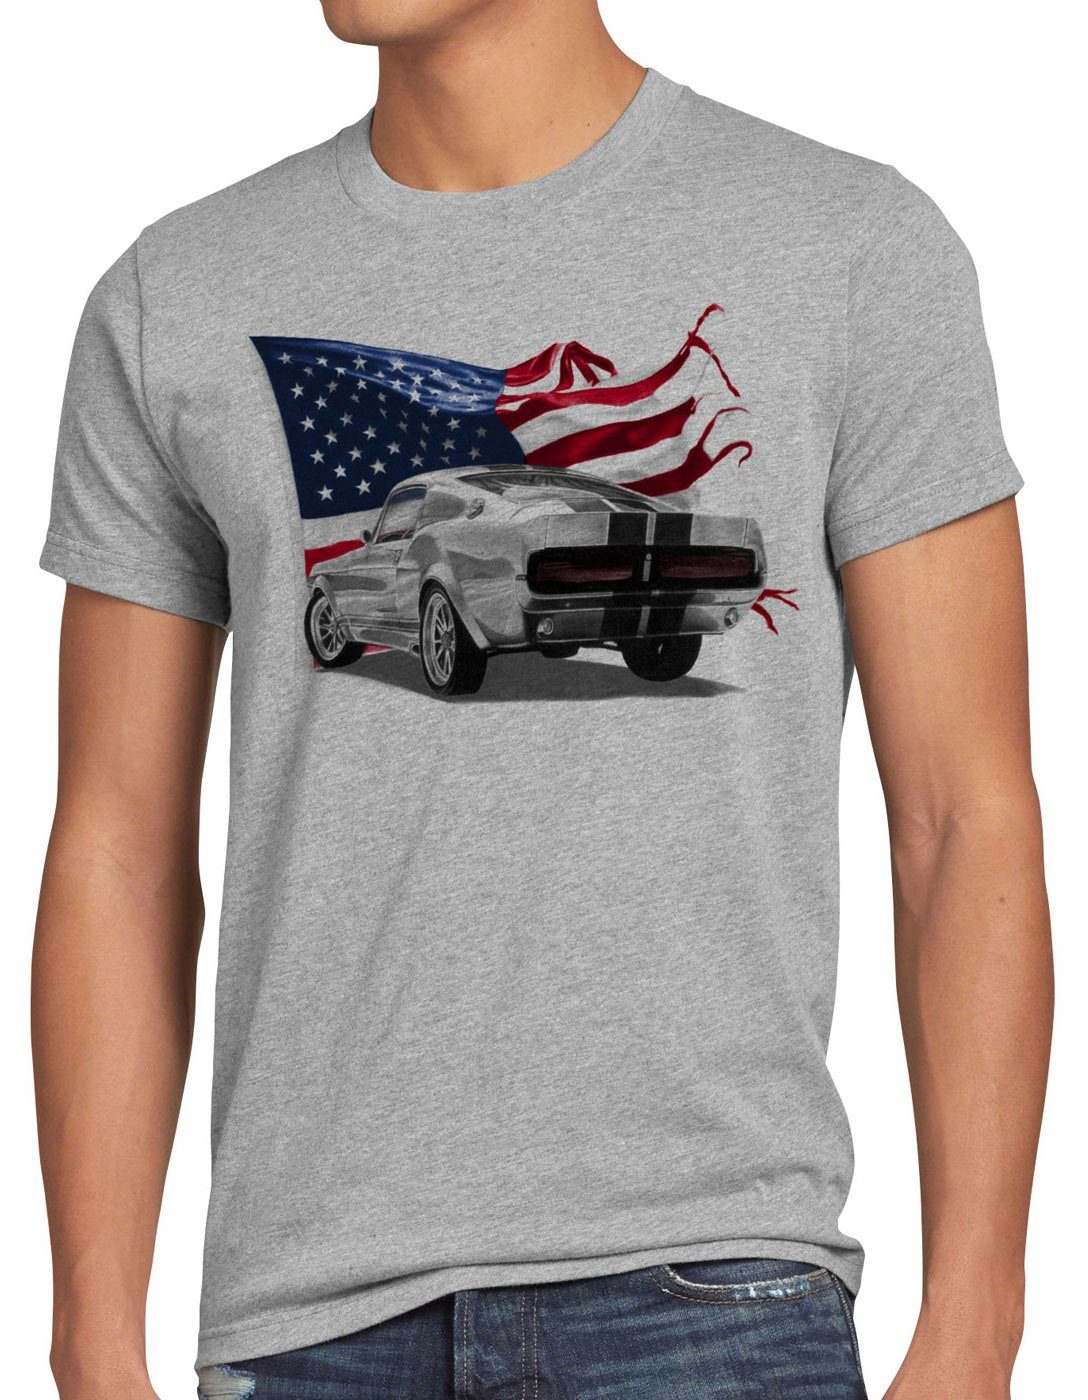 Car Print-Shirt Muscle Herren eleanor Stars T-Shirt meliert Stripes and style3 mustang grau